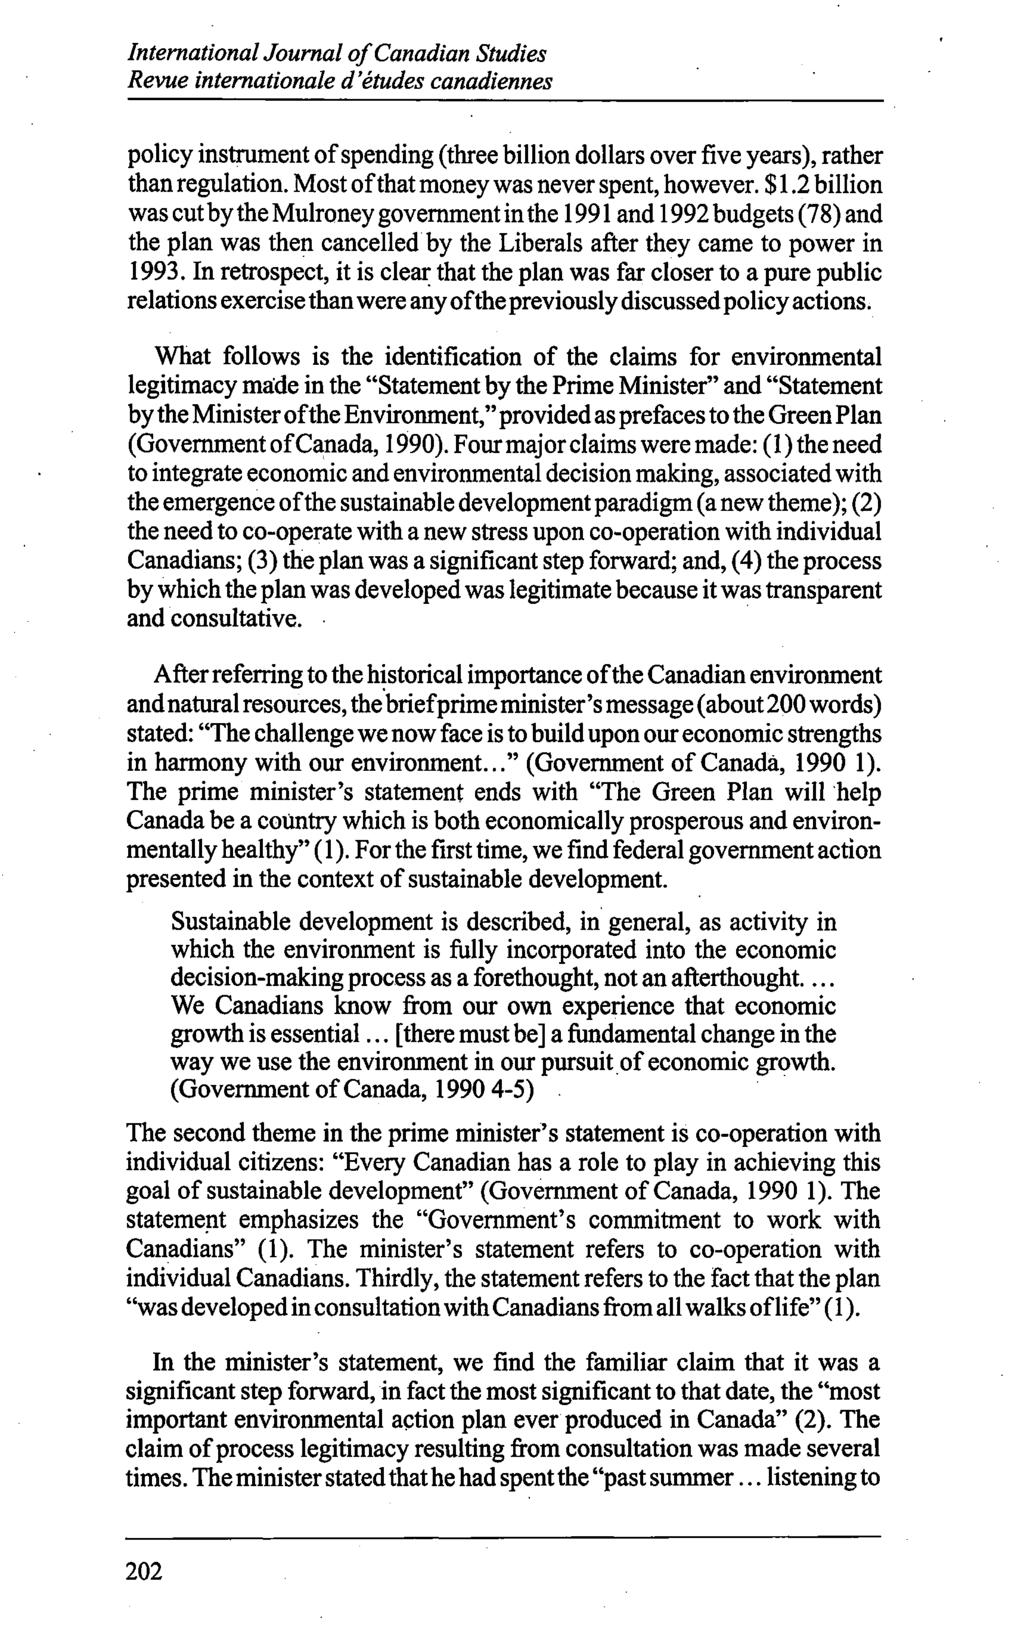 InternationalJournal of Canadian Studies Revue internationale d'études canadiennes policy instrument of spending (three billion dollars overfiveyears), rather than regulation.